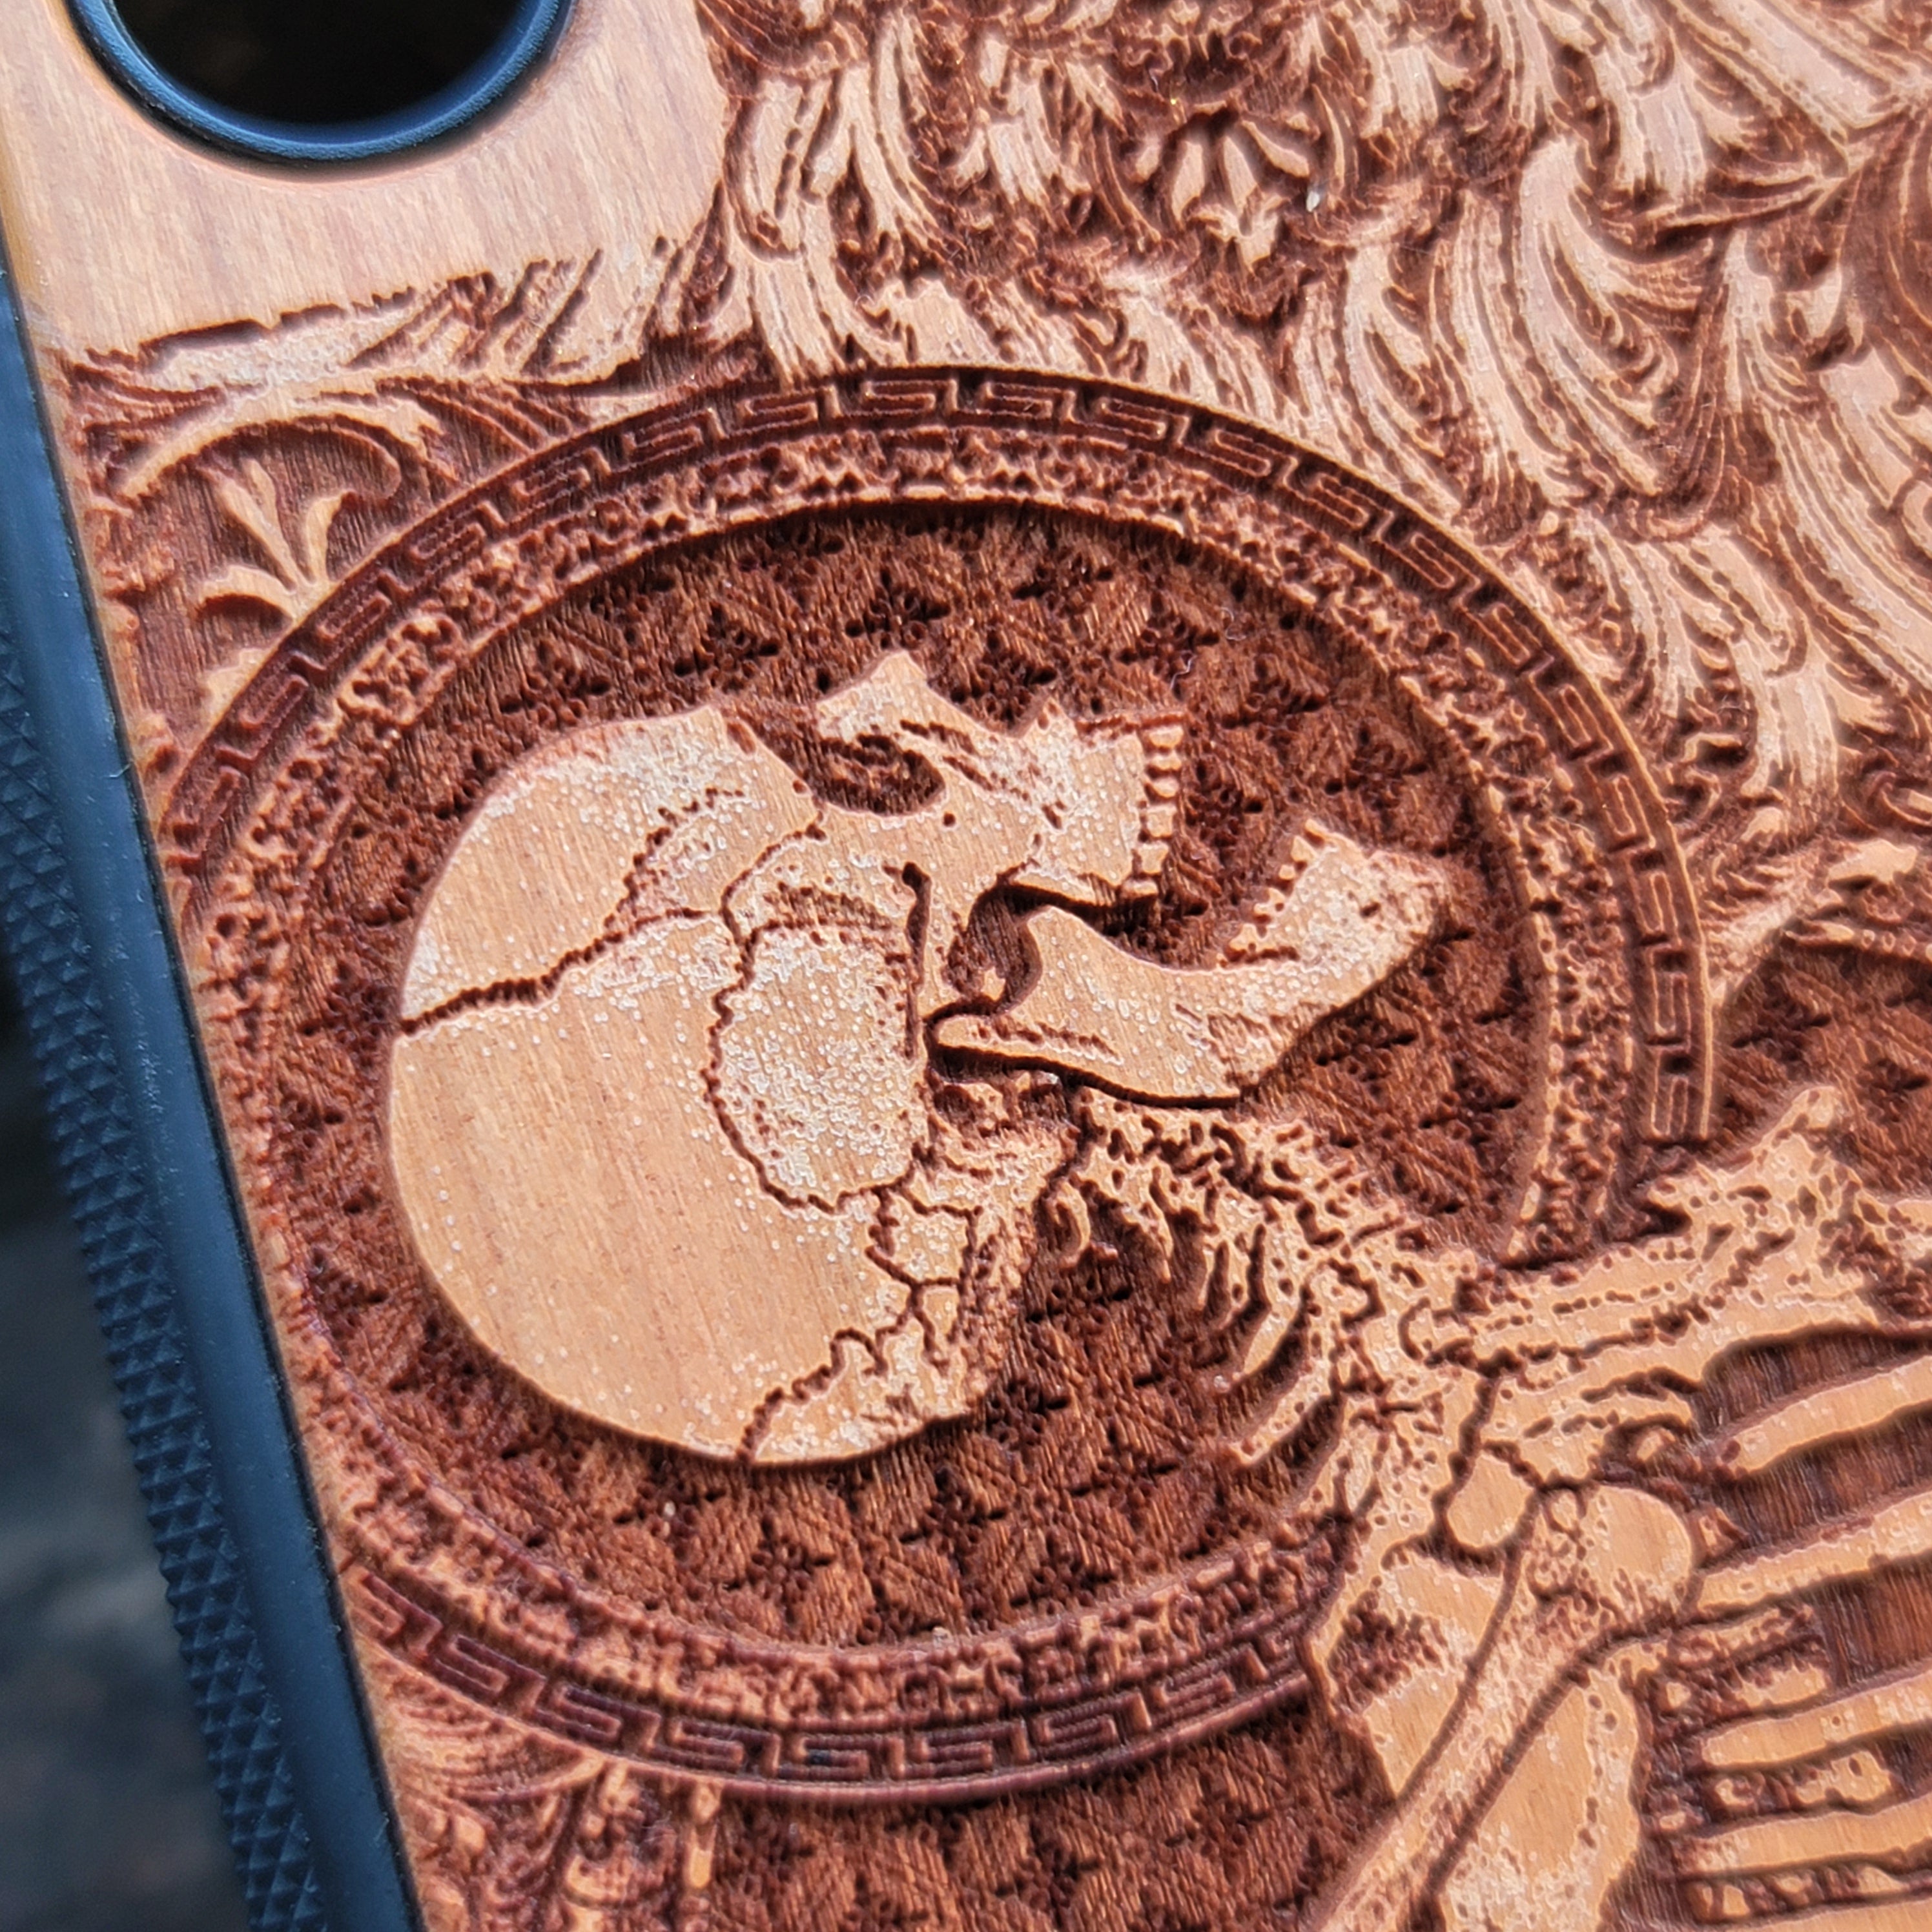 iPhone & Samsung Galaxy Wood Phone Case - "Stumble" Gothic Pattern